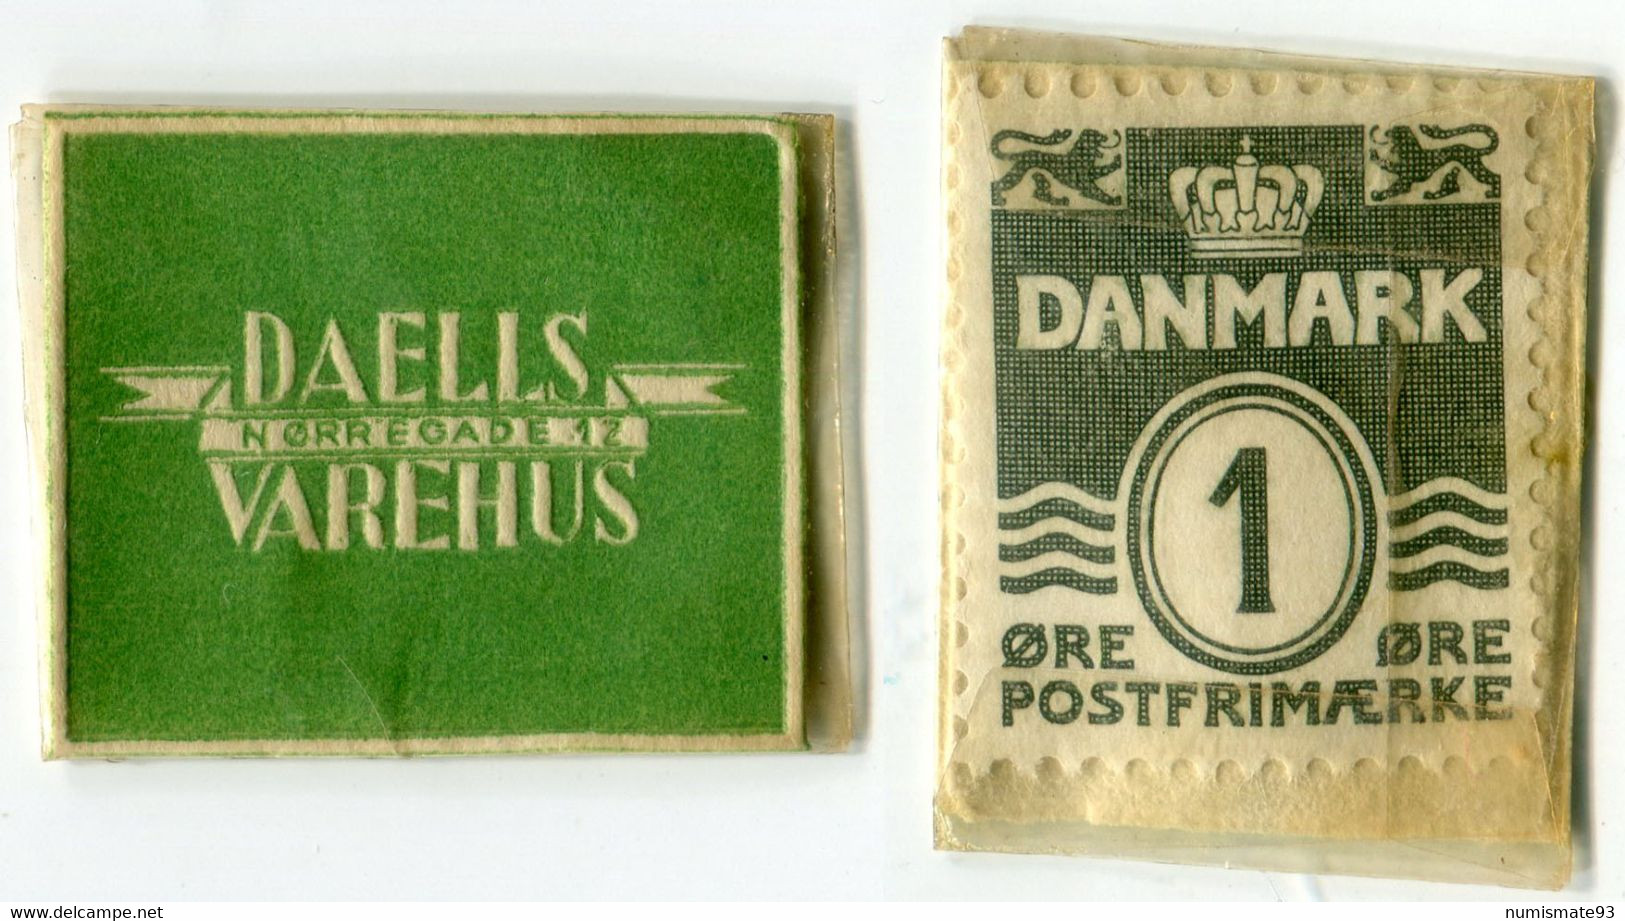 N93-0698 - Timbre-monnaie - Danemark - Daells Varehus - Nørregade 12 - 1 øre - Kapselgeld - Encased Stamp - Monetary /of Necessity